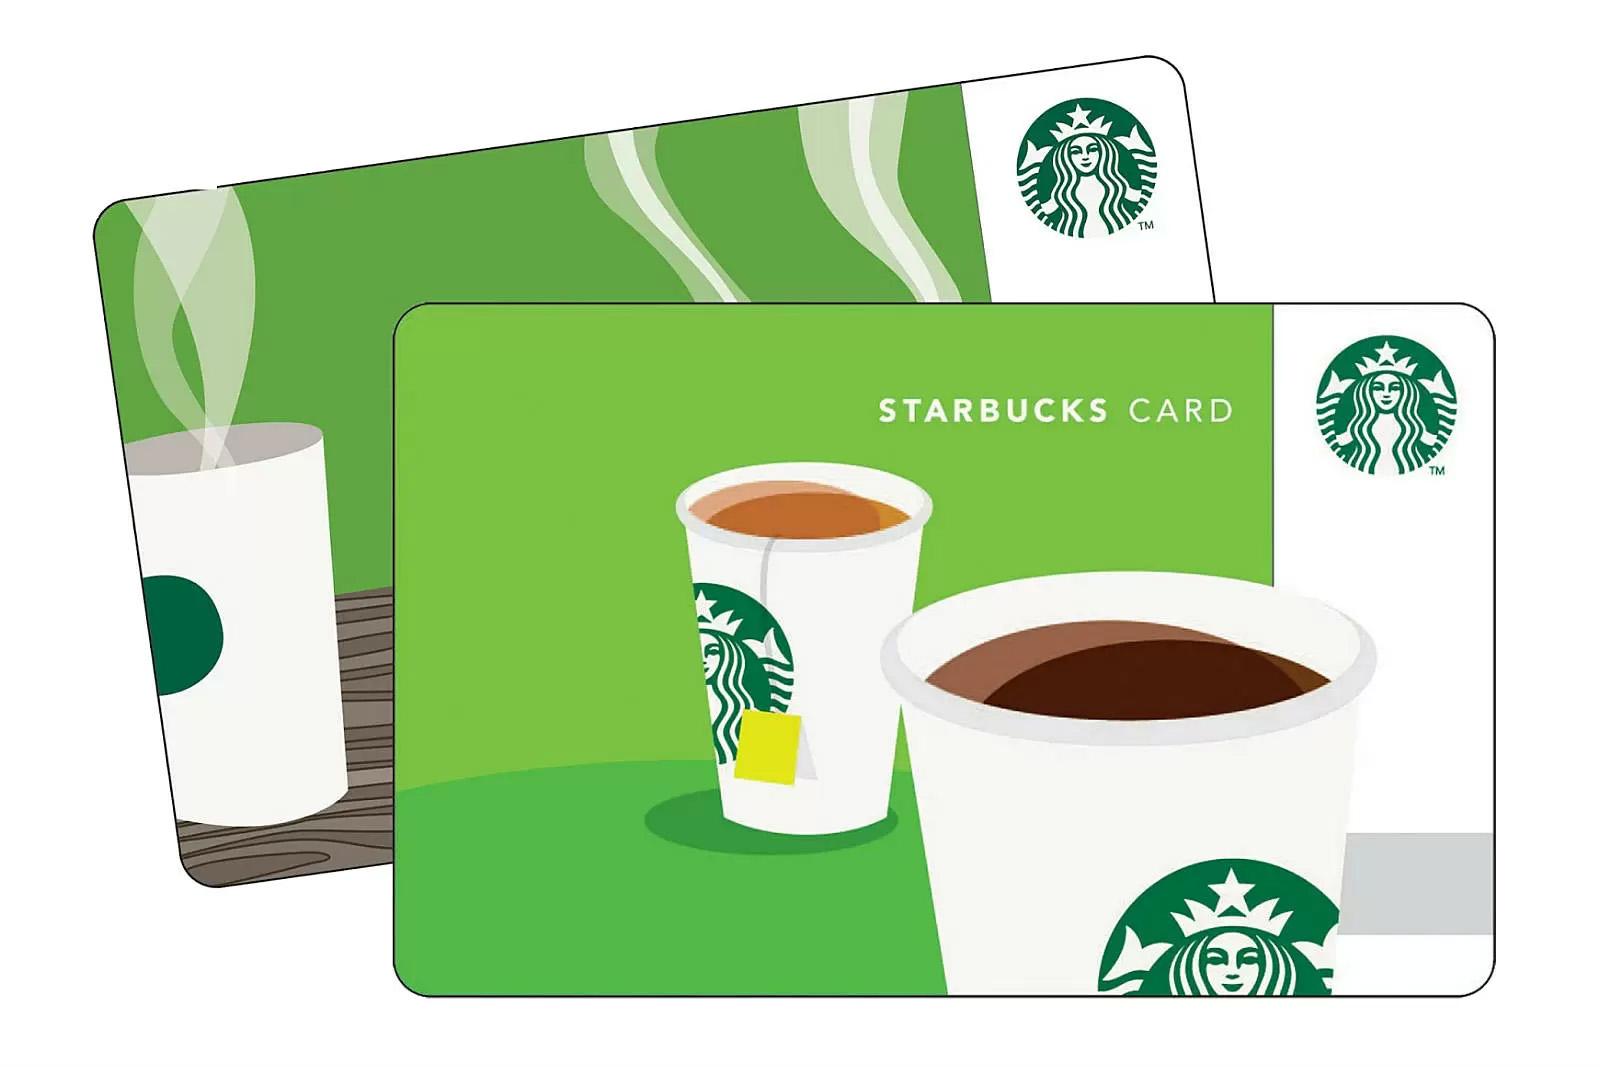 Free $5 Starbucks Bonus with $20 Gift Card Purchase for Mastercard Holders